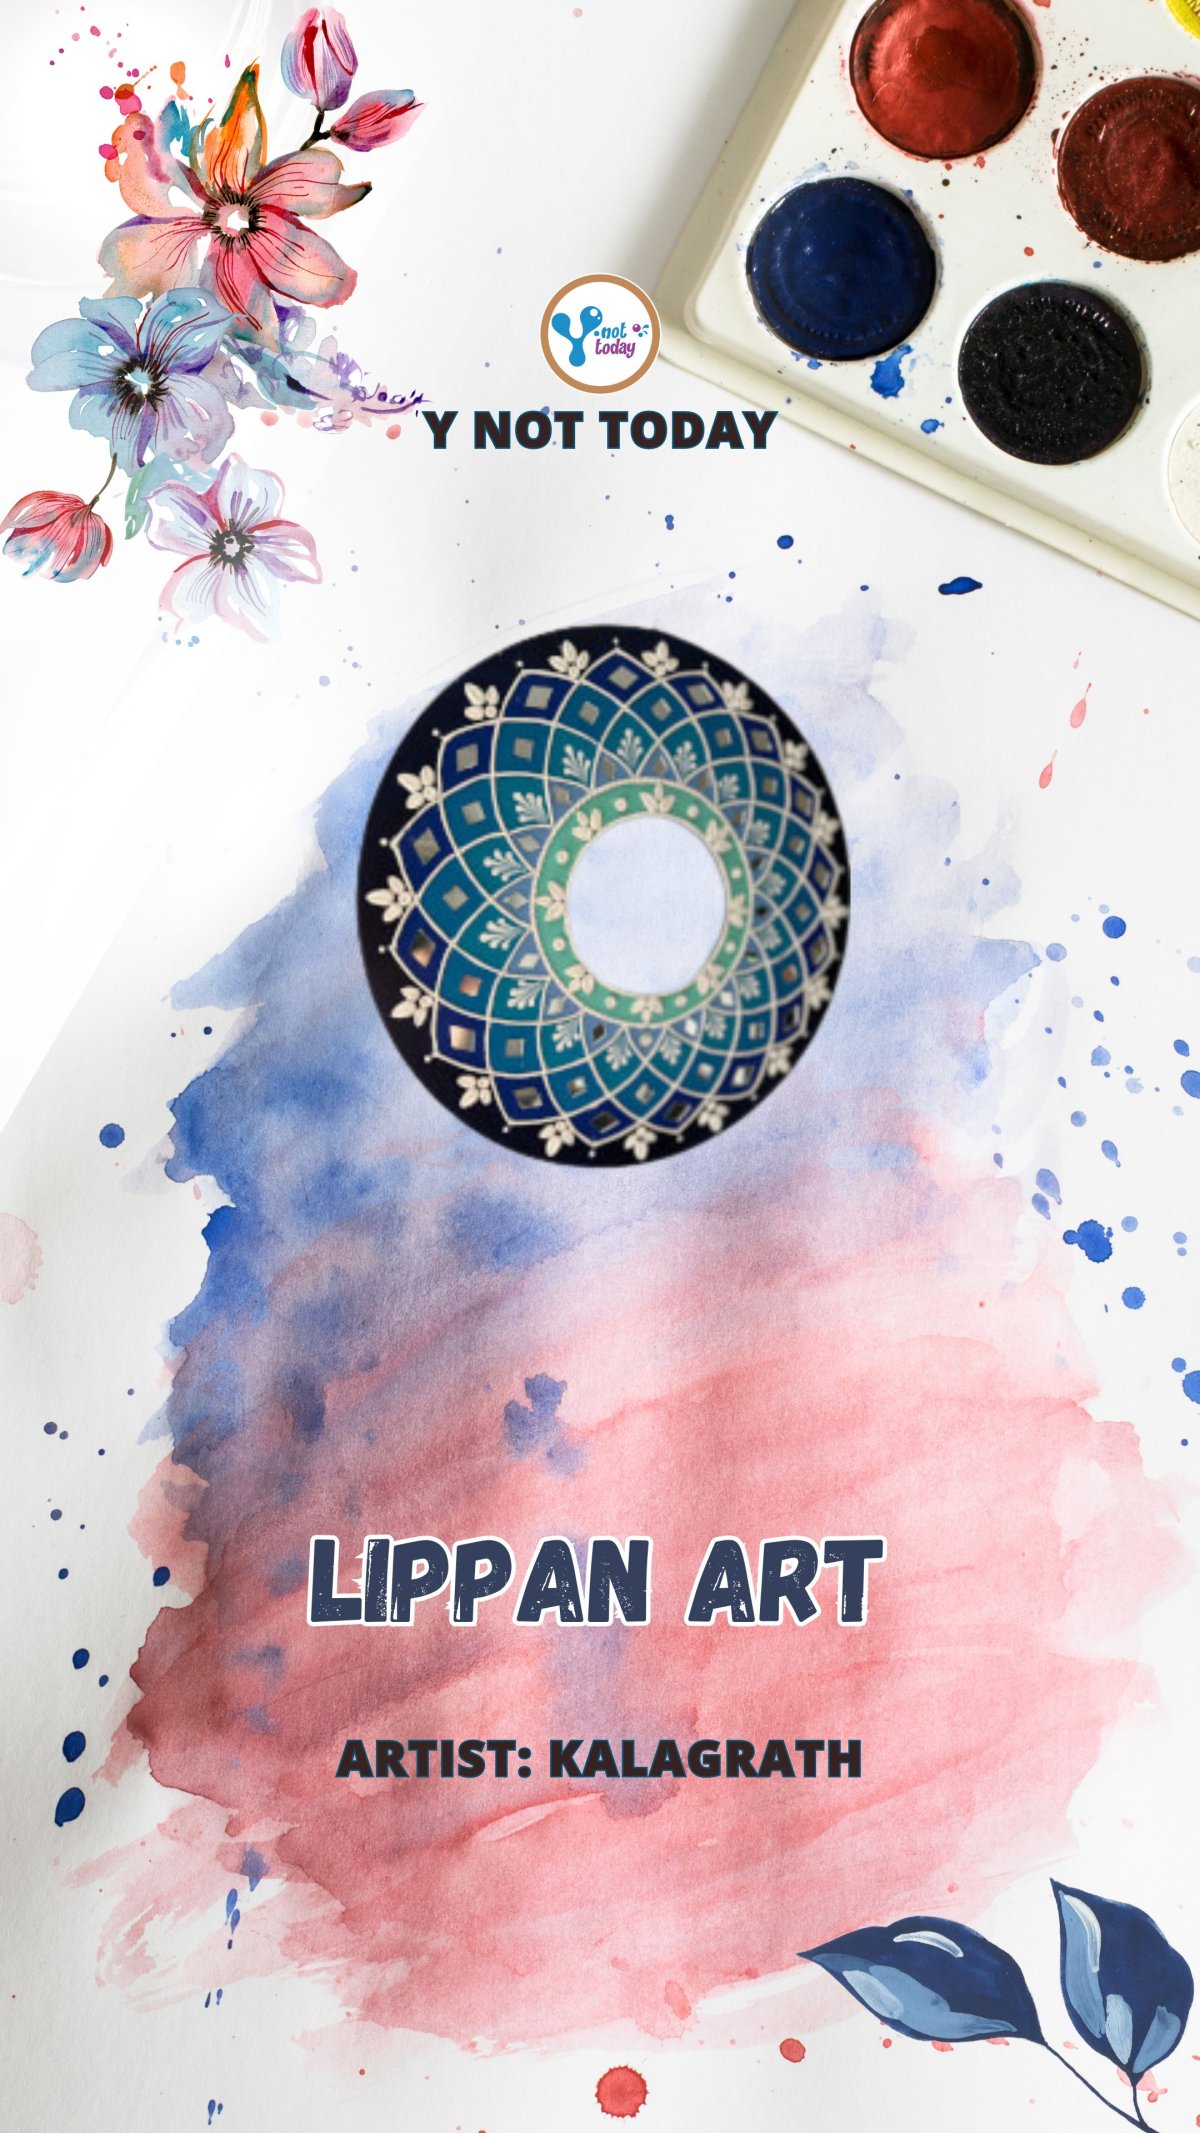 Lippan art. Y NOT TODAY - image